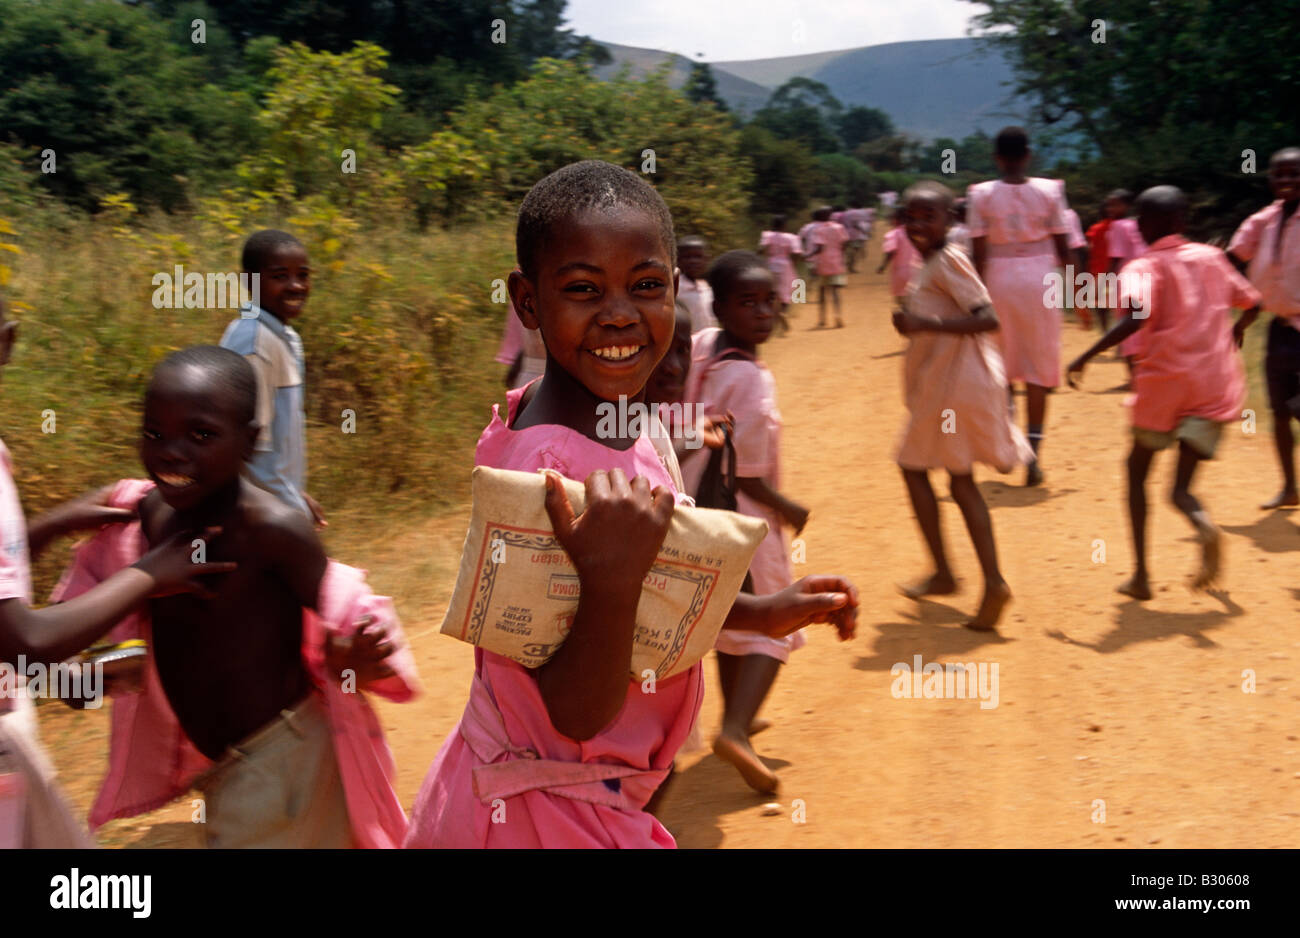 Crowd of schoolchildren running along dirt track in pink uniforms, Uganda, Africa Stock Photo